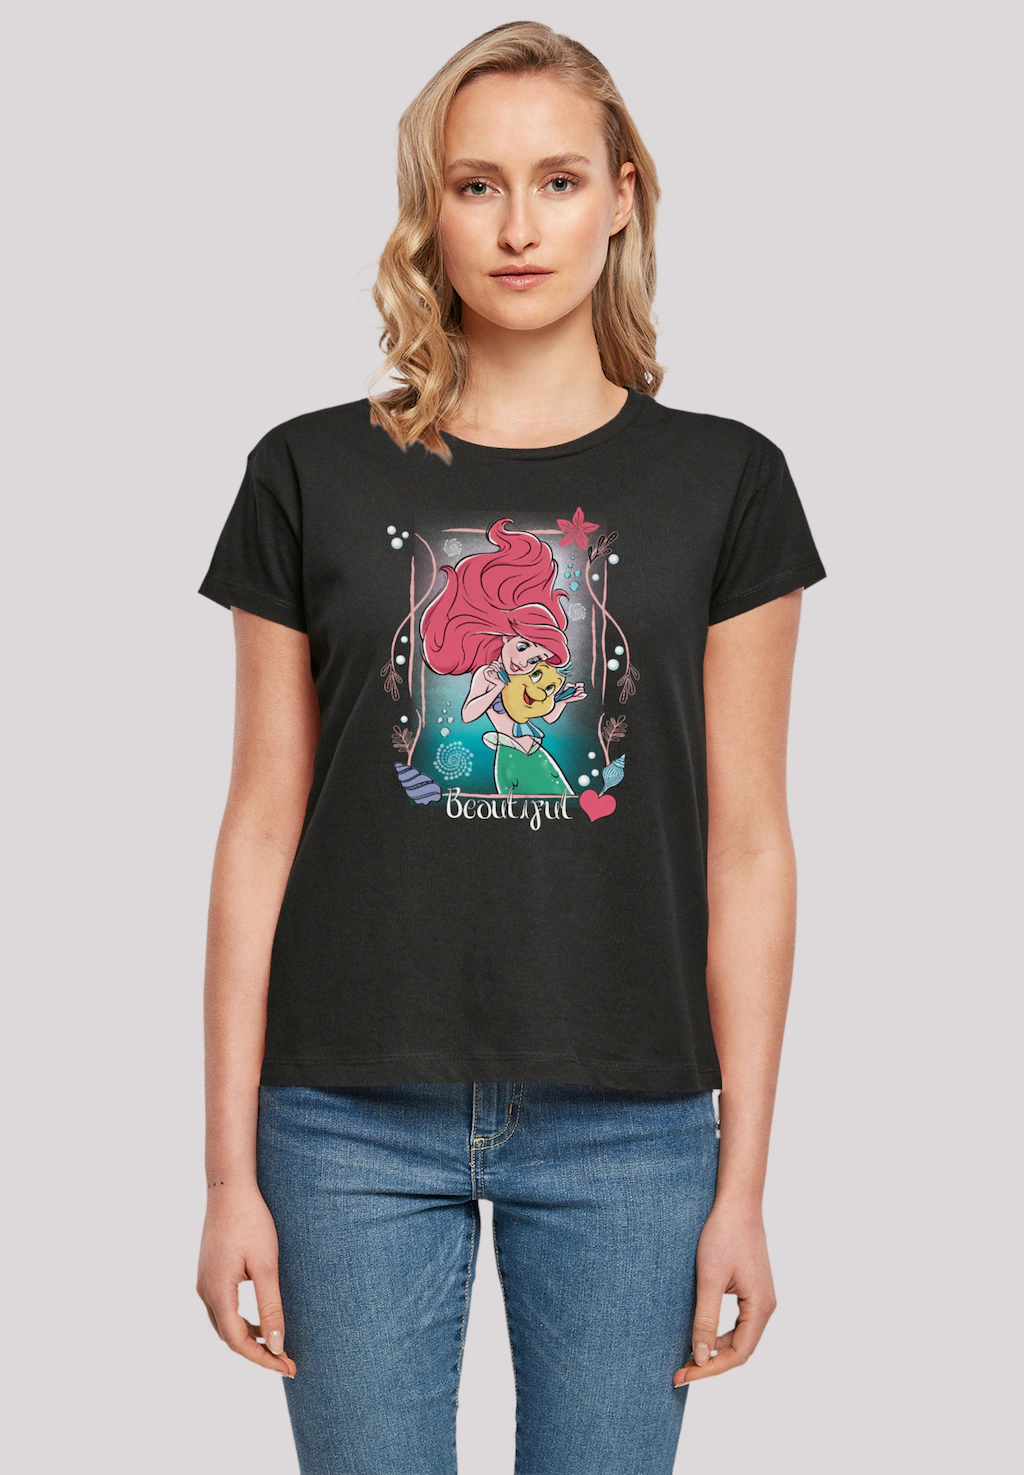 F4NT4STIC T-Shirt "Disney Princesses Ariel Beautiful", Premium Qualität günstig online kaufen